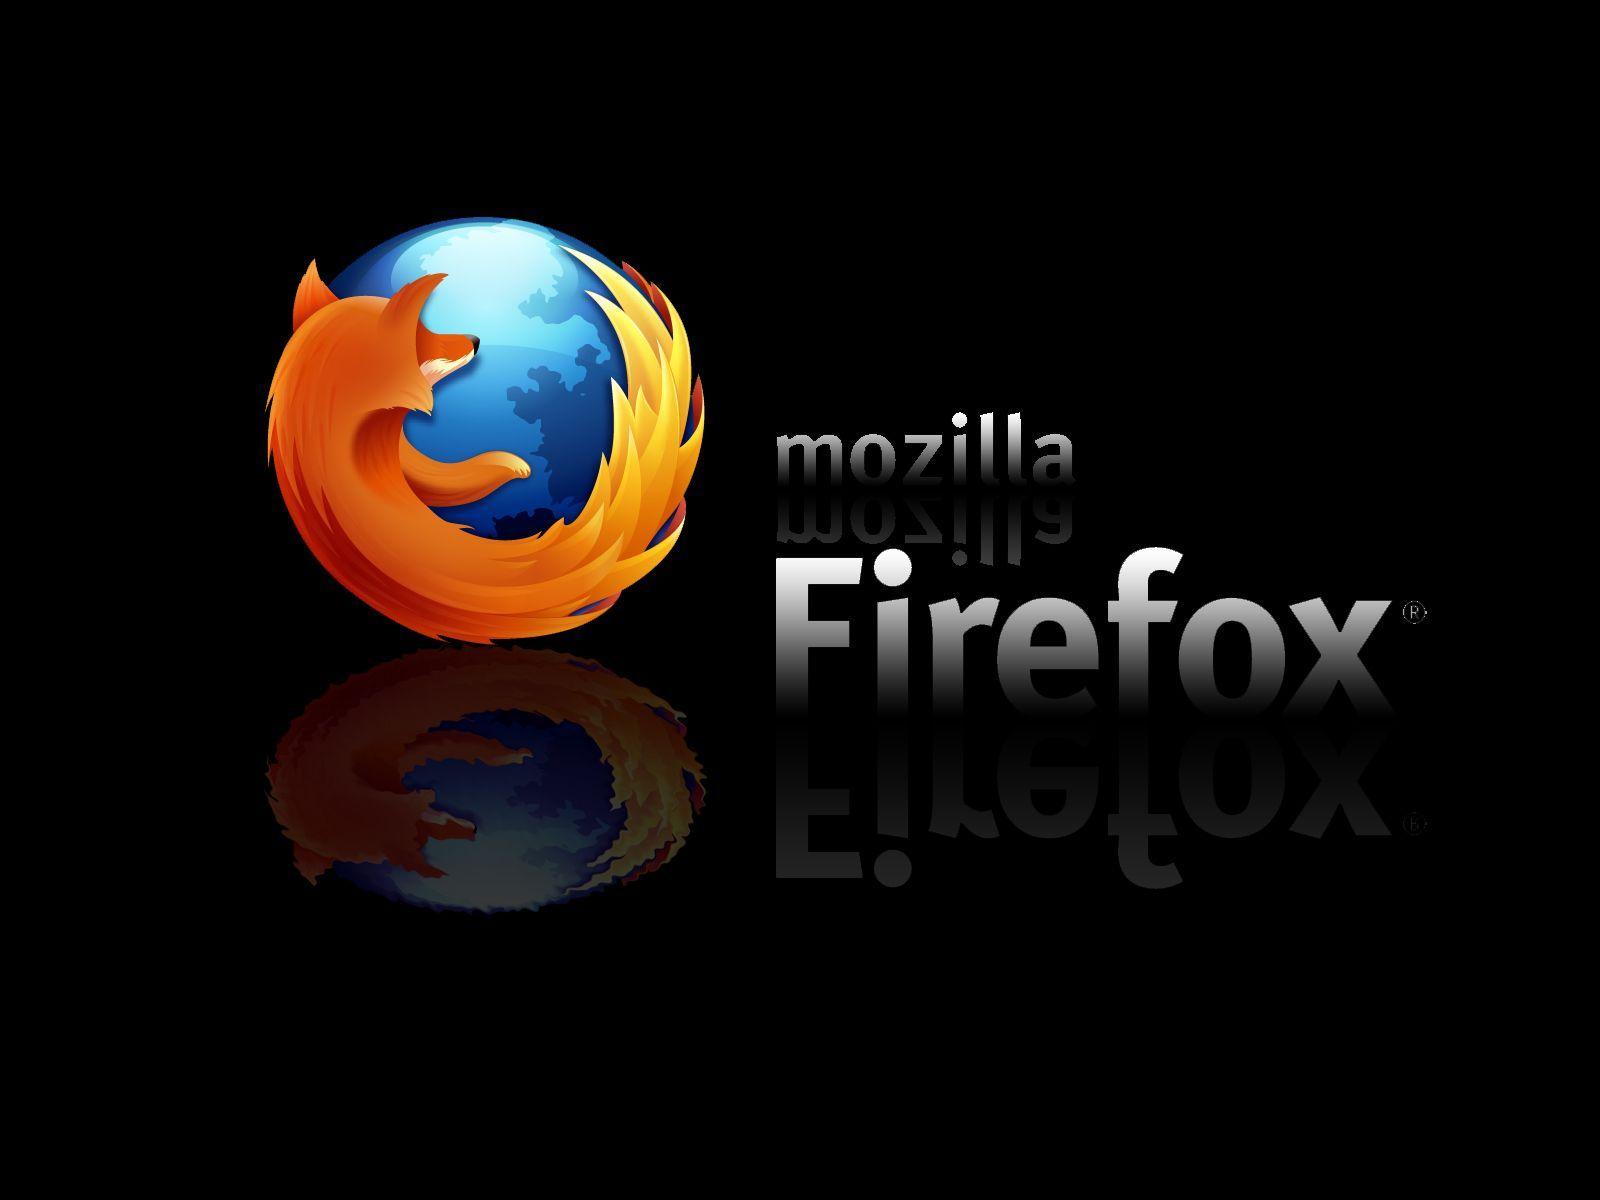 mozilla firefox portable 19.0 free download